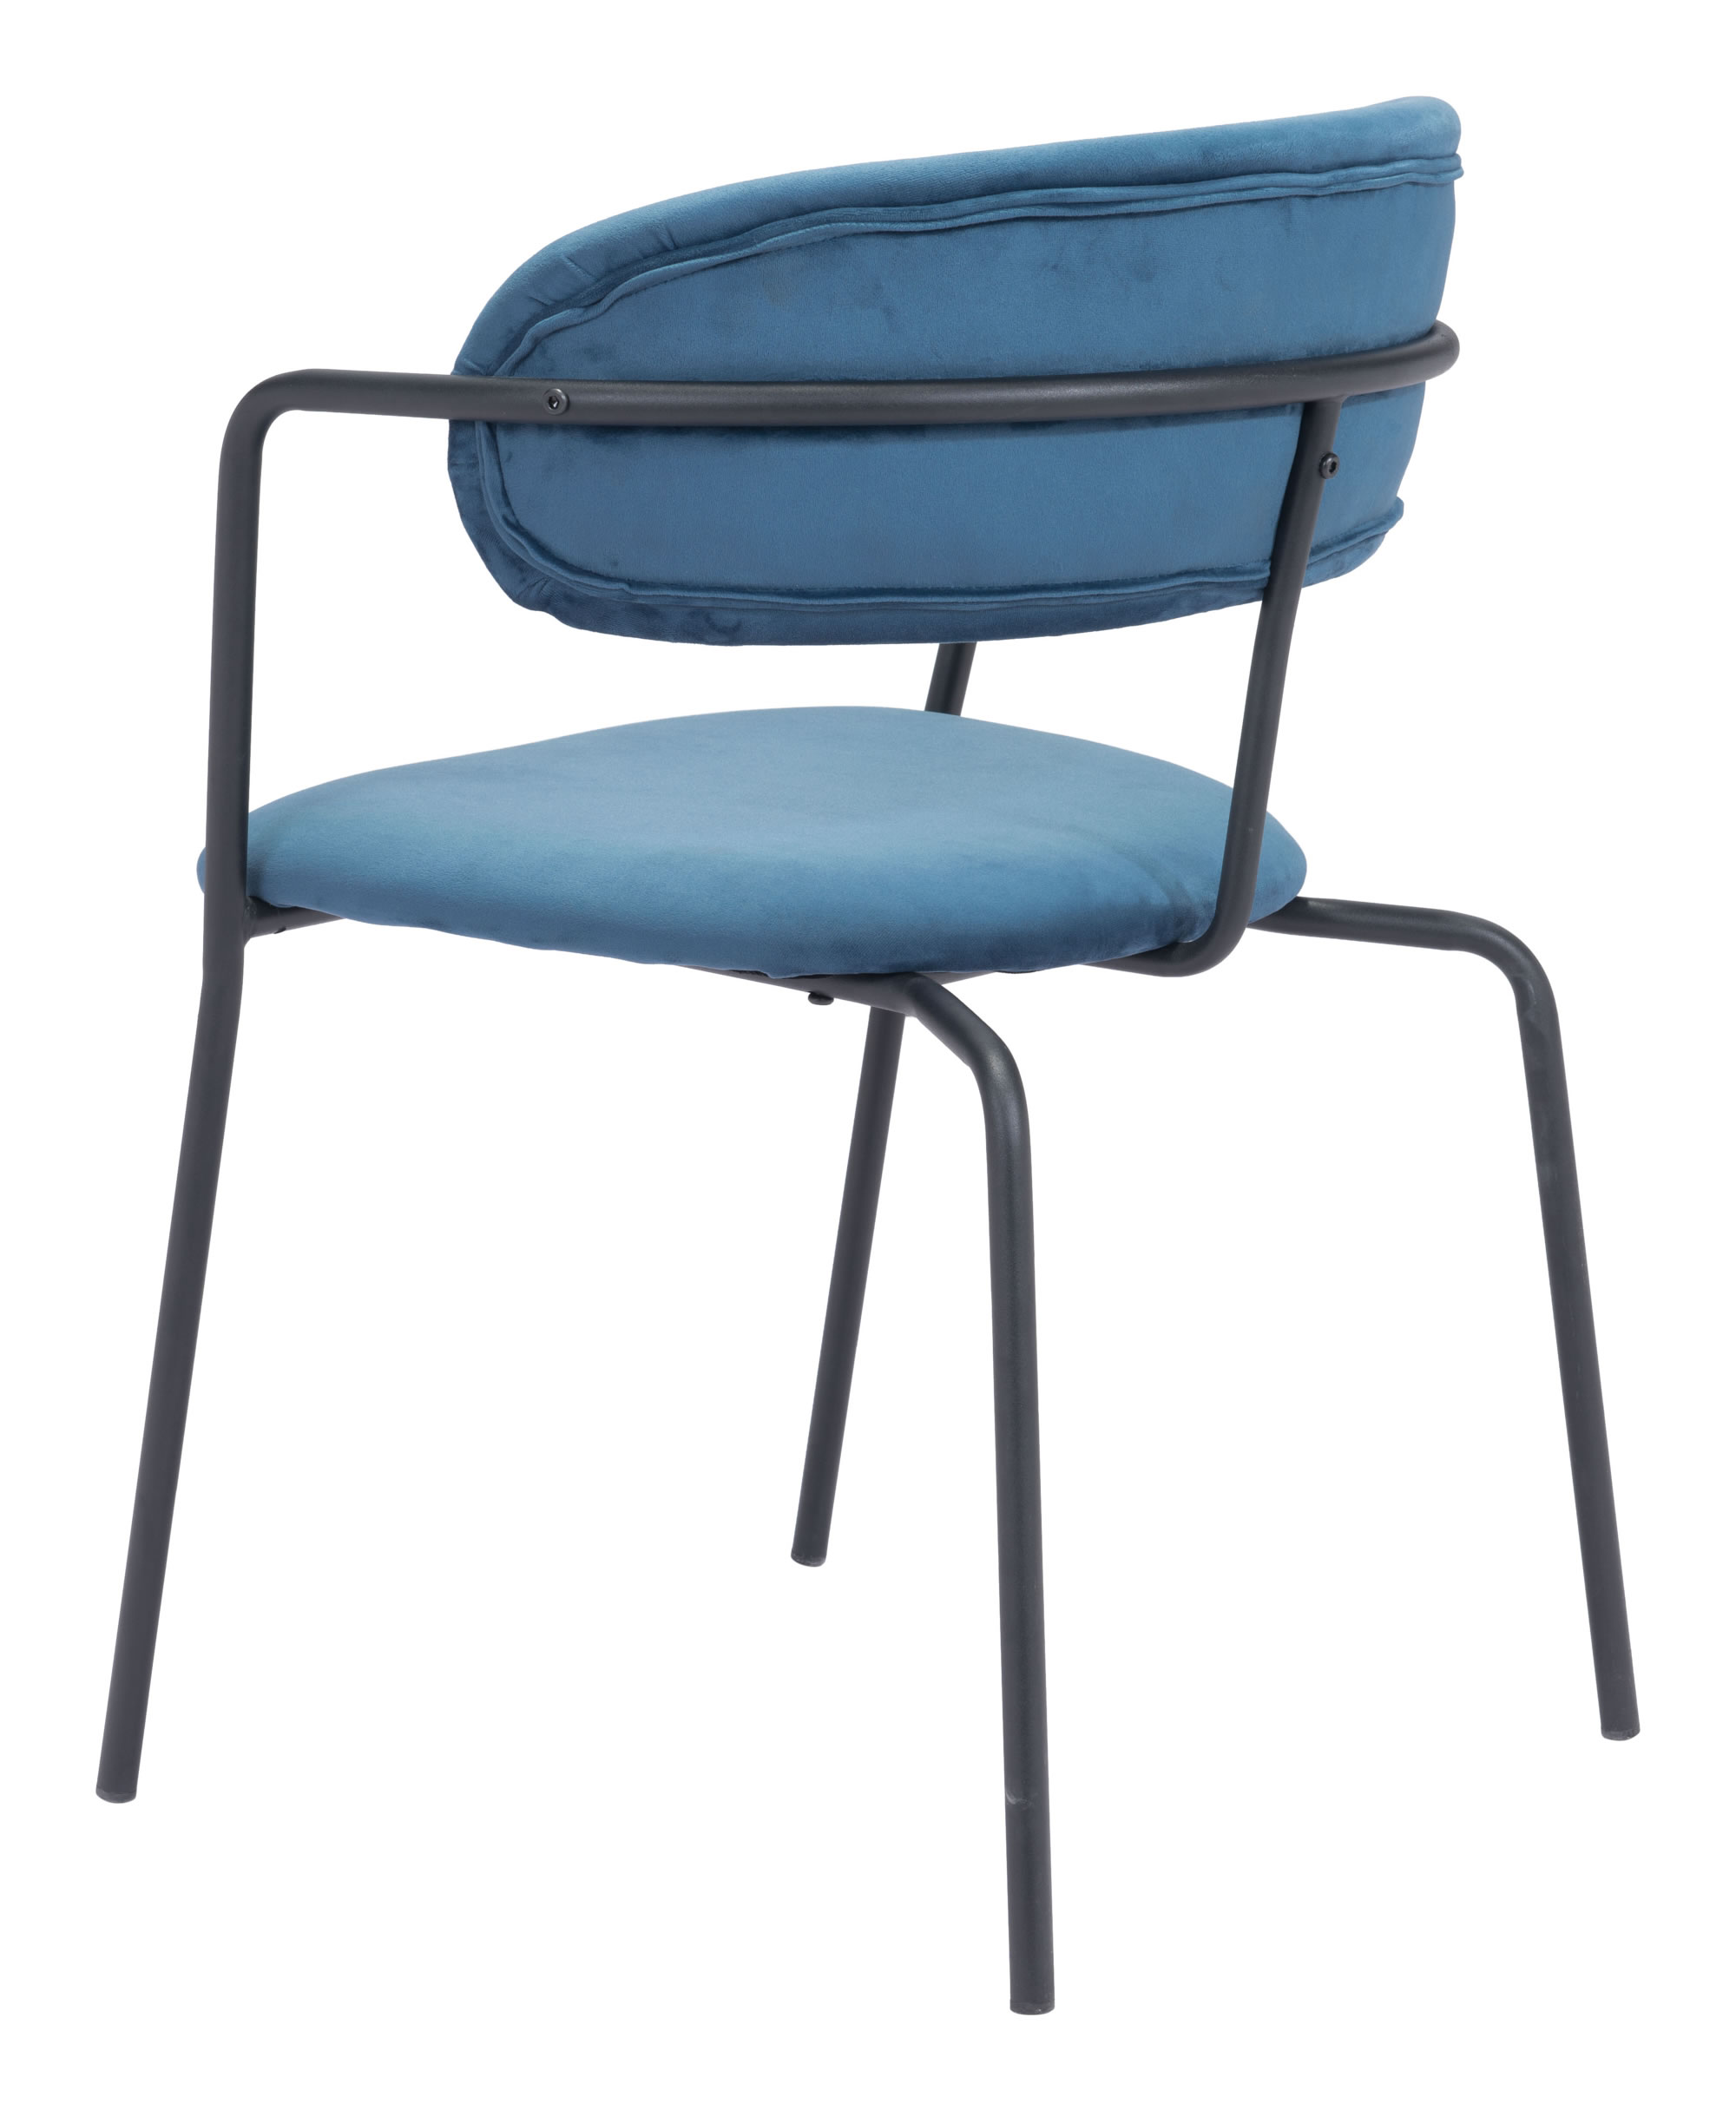 22.8" x 22.8" x 31.1" Blue & Black, Velvet, Steel & Plywood, Chair - Set of 2